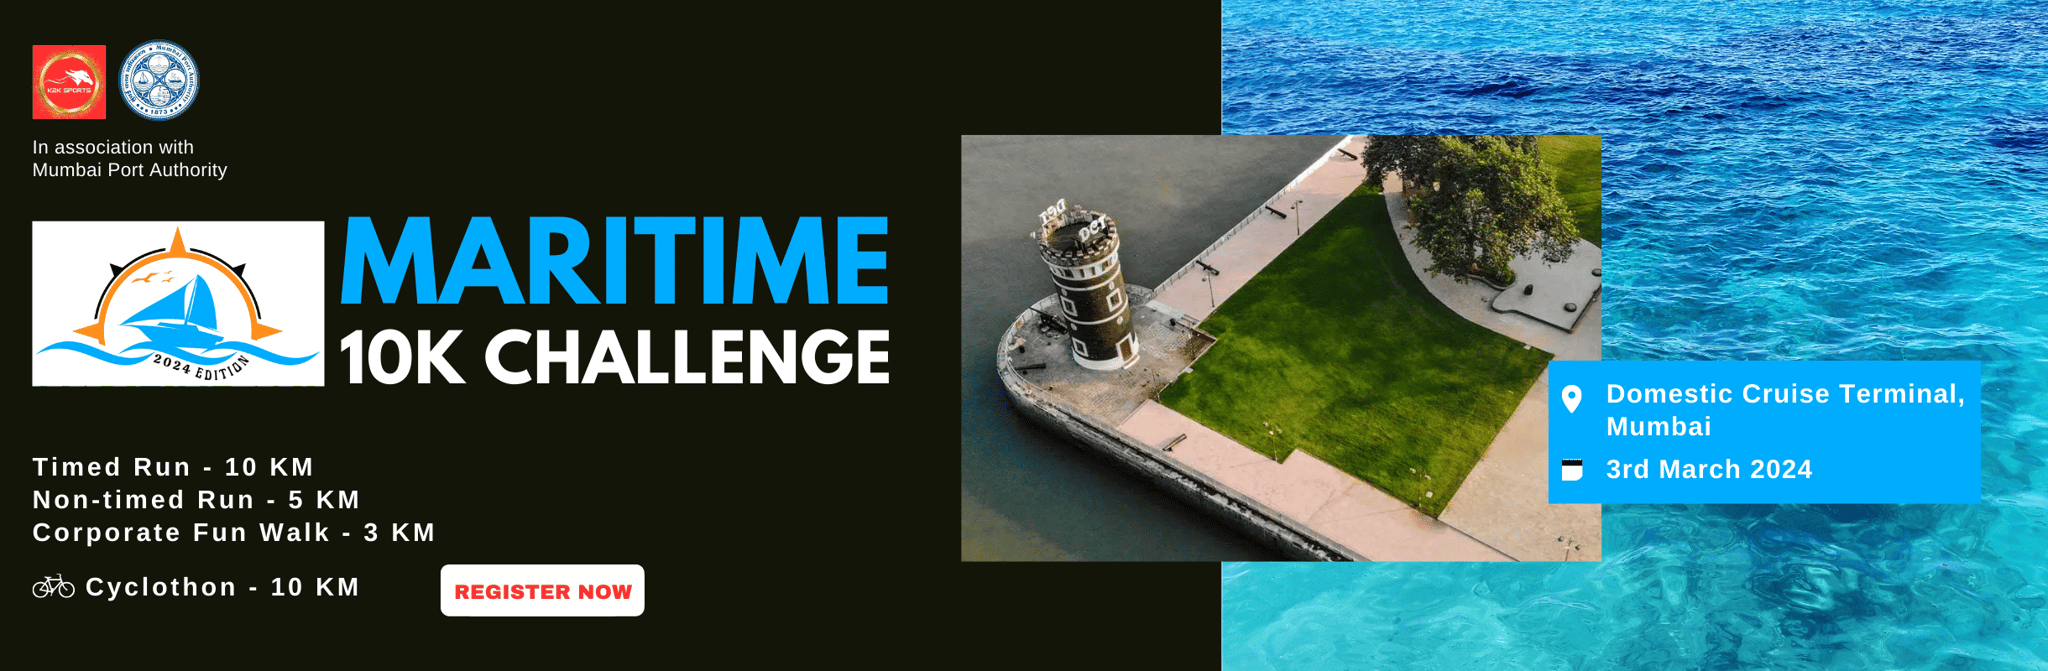 Maritime 10 K Challenge